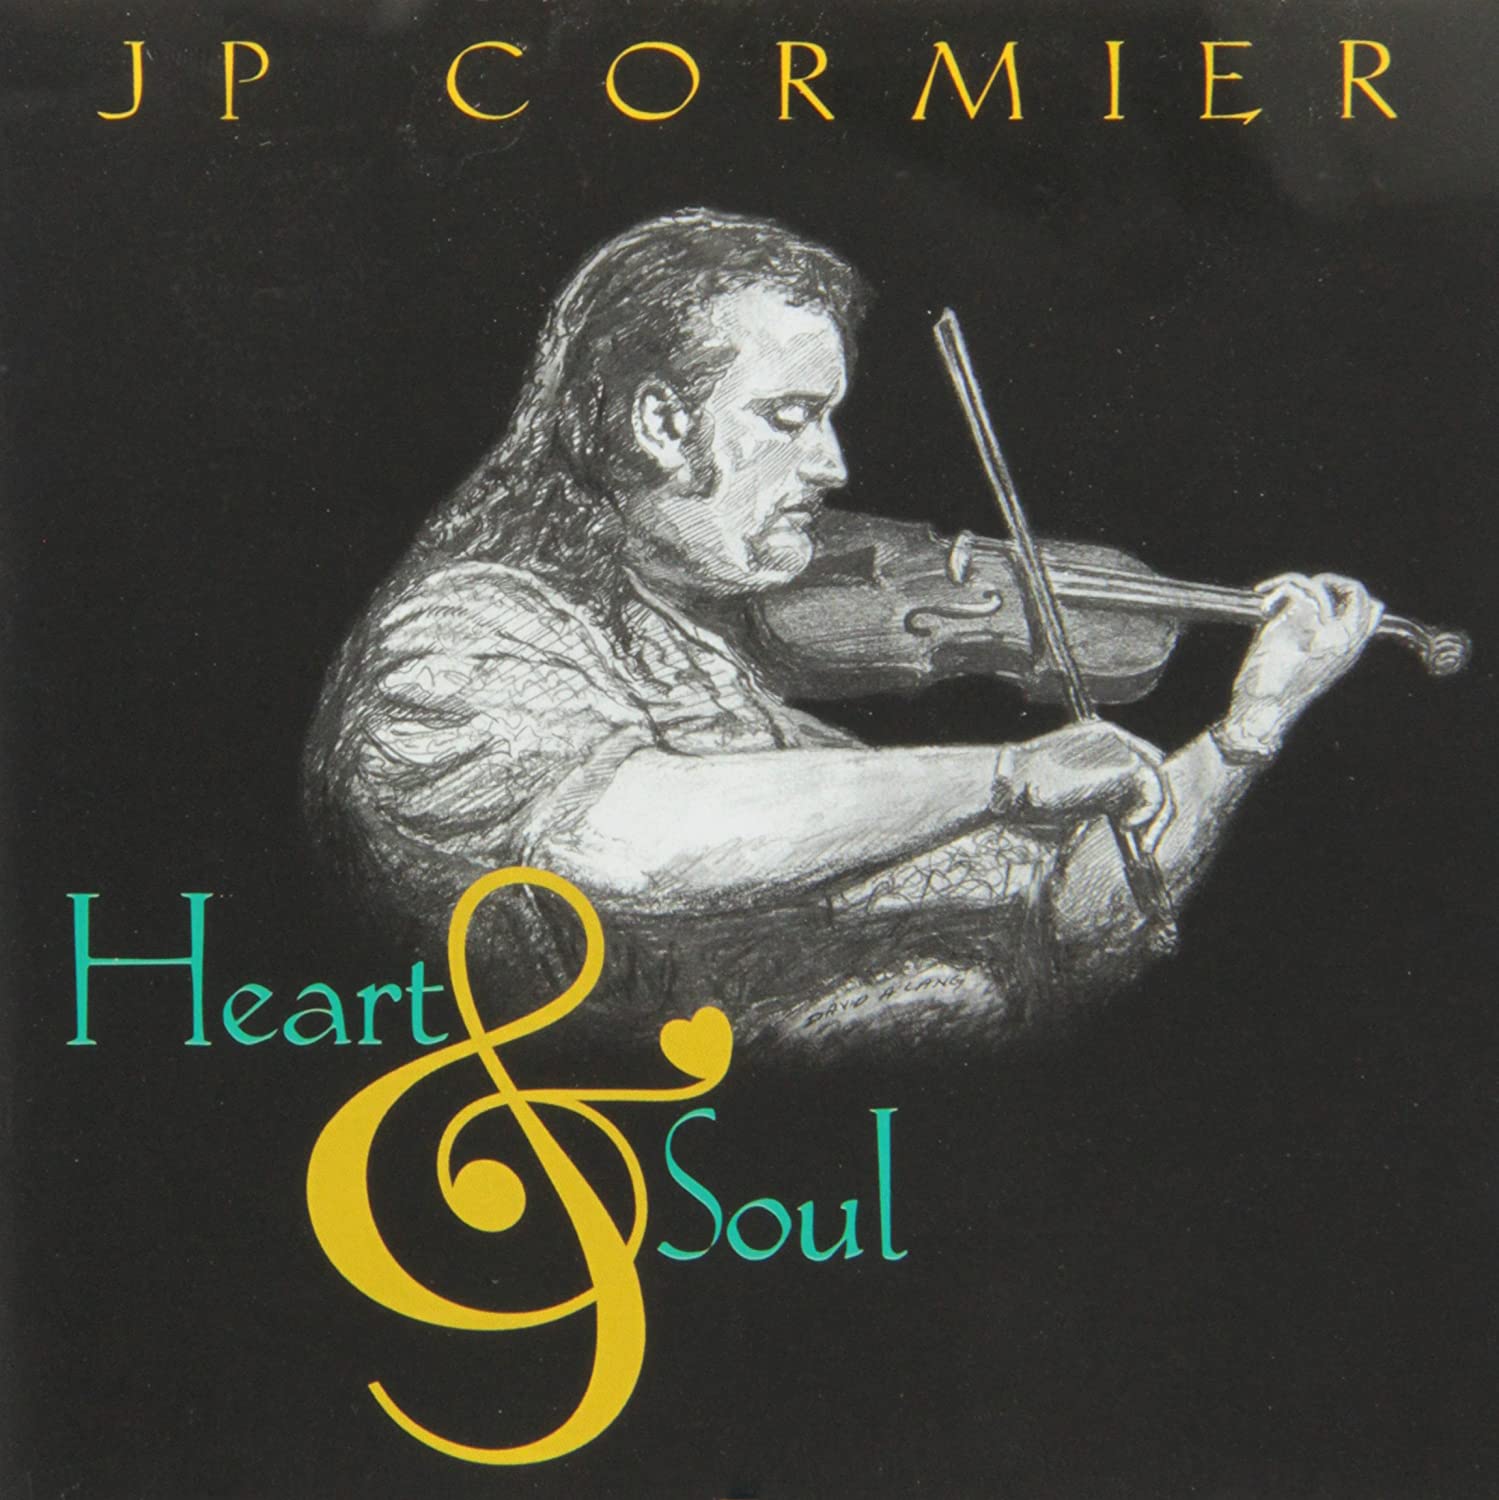 J.P. Cormier - Heart and Soul (1999)